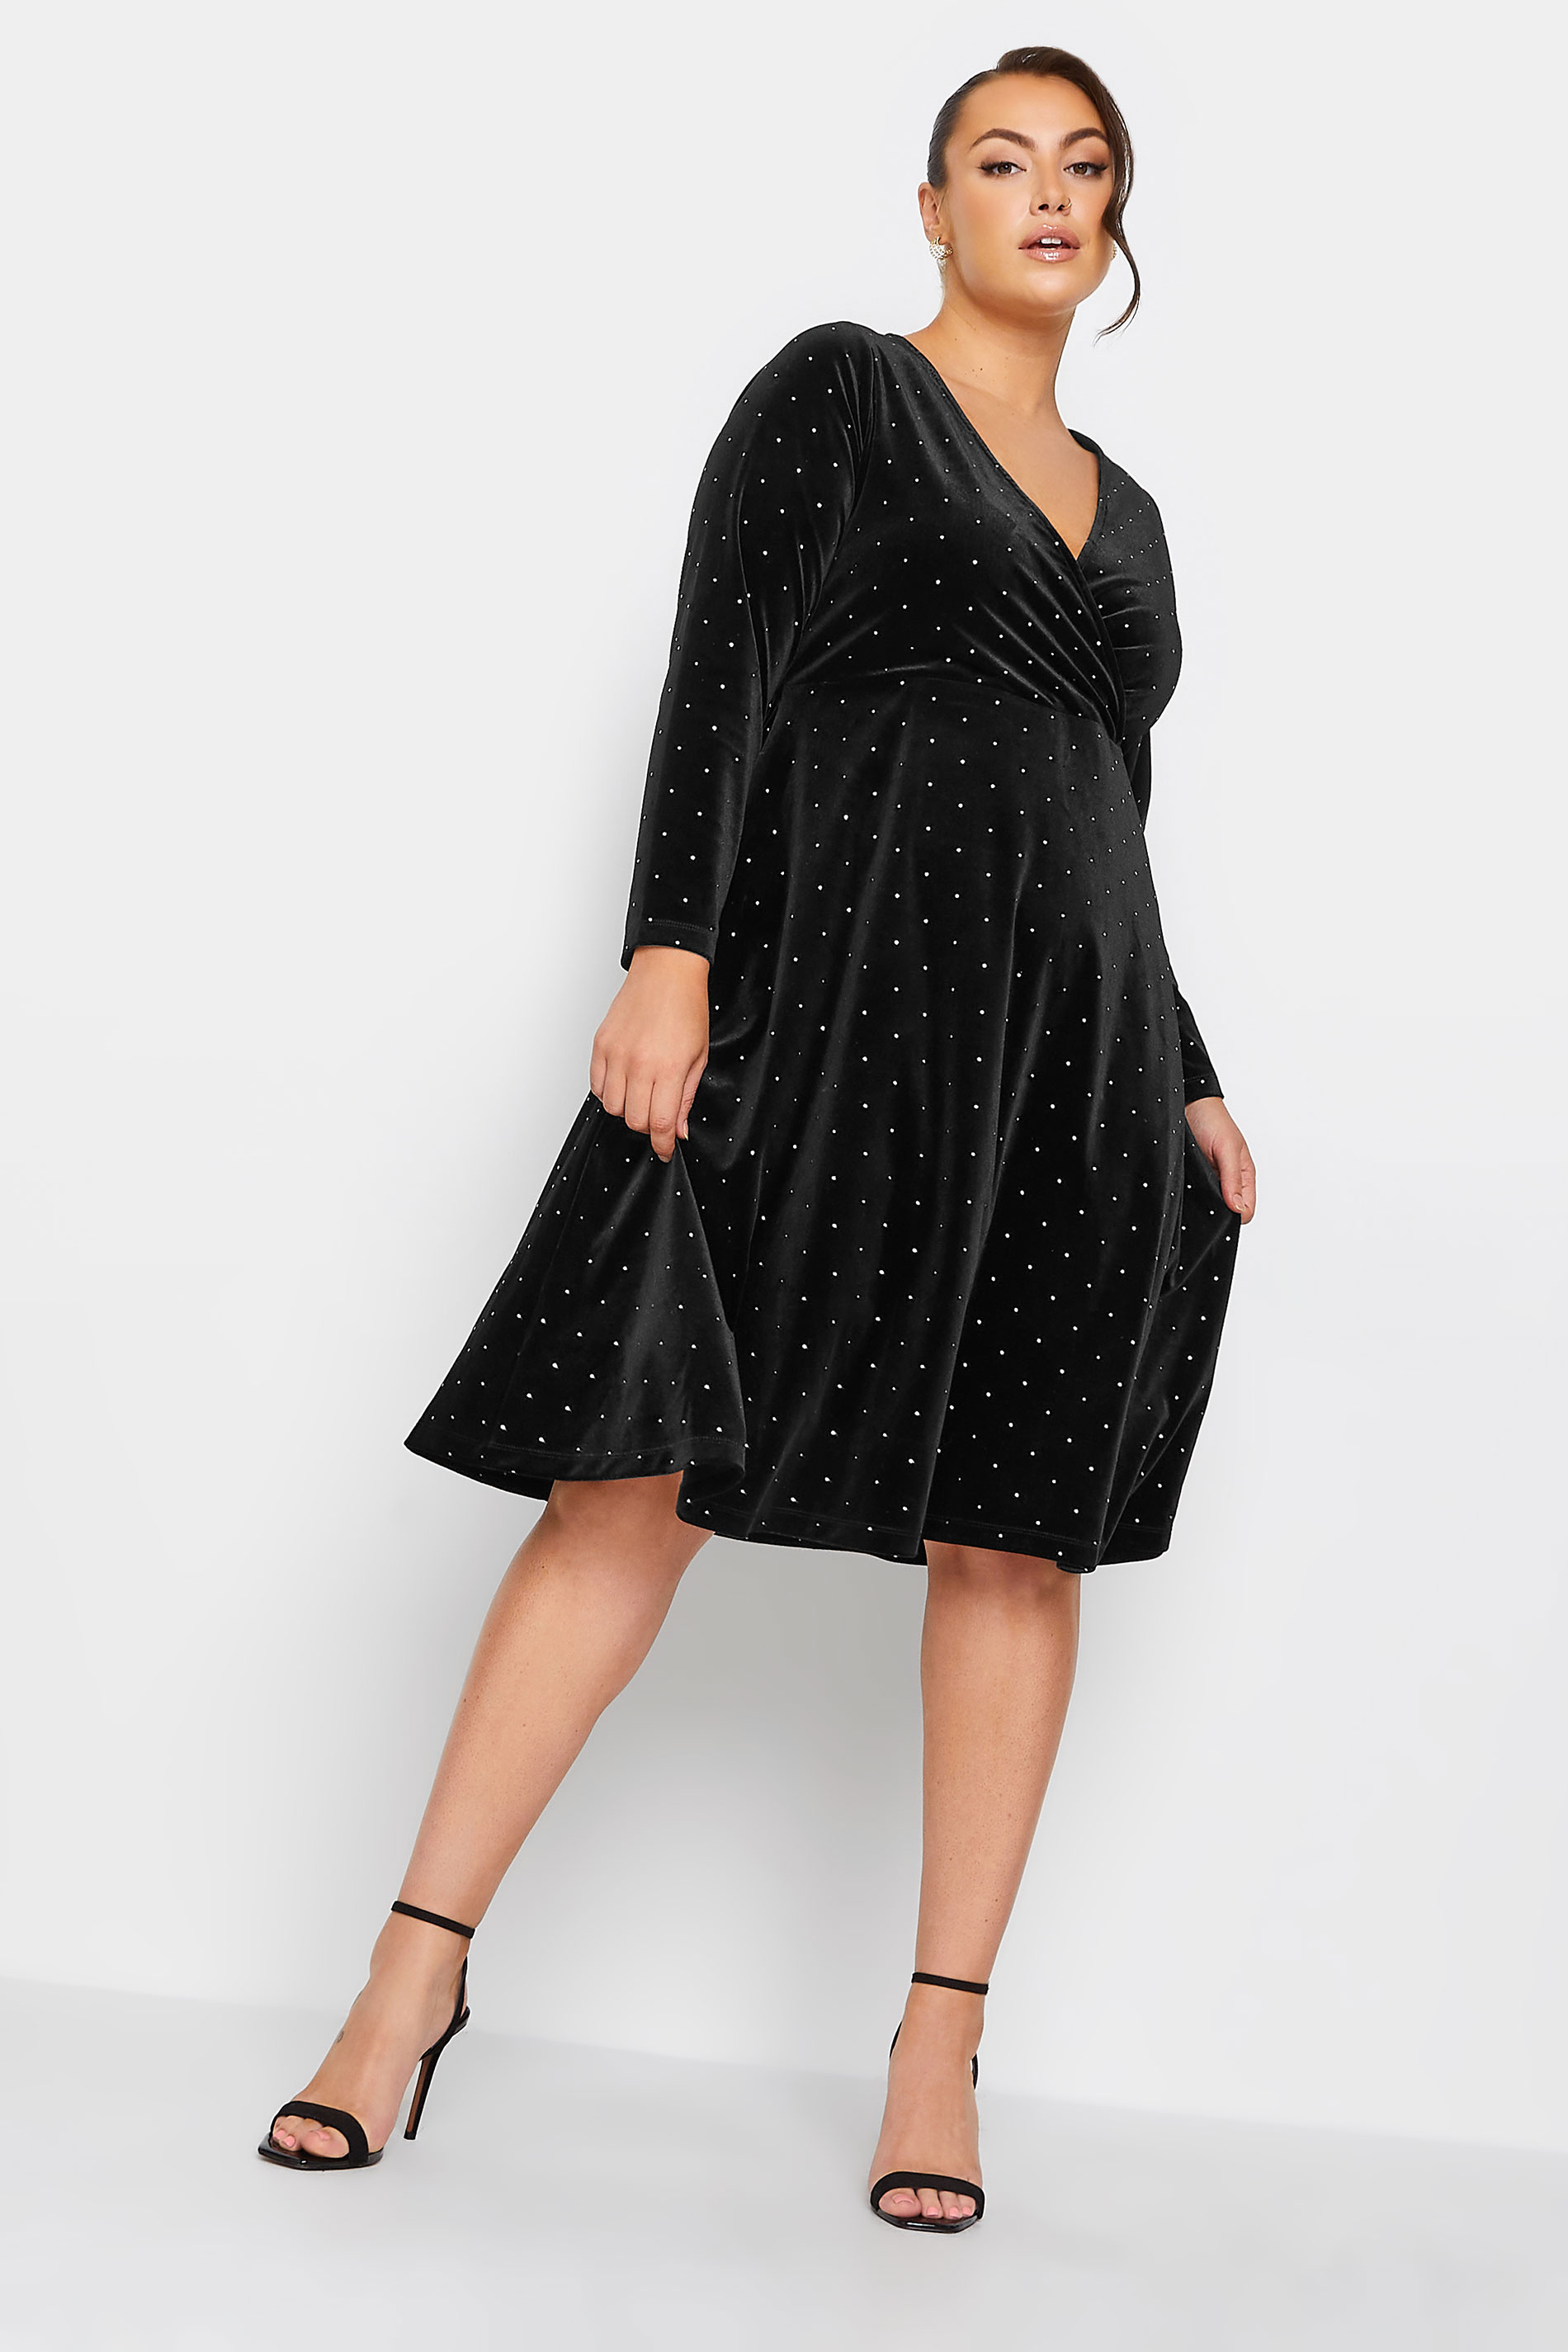 YOURS LONDON Plus Size Black Stud Velvet Wrap Dress | Yours Clothing 1